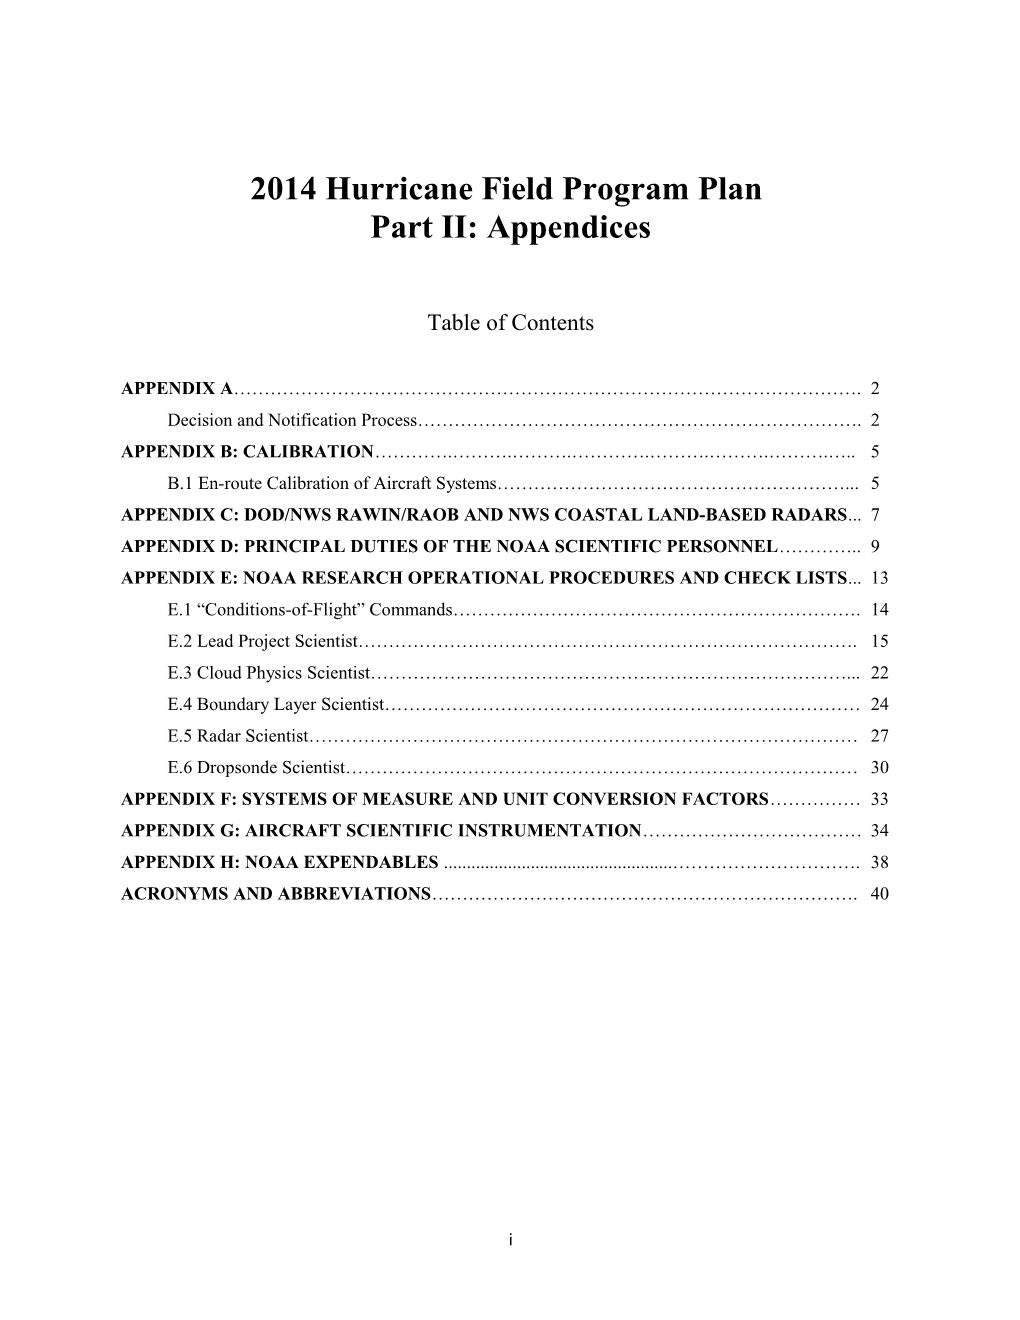 2014Hurricane Field Program Plan